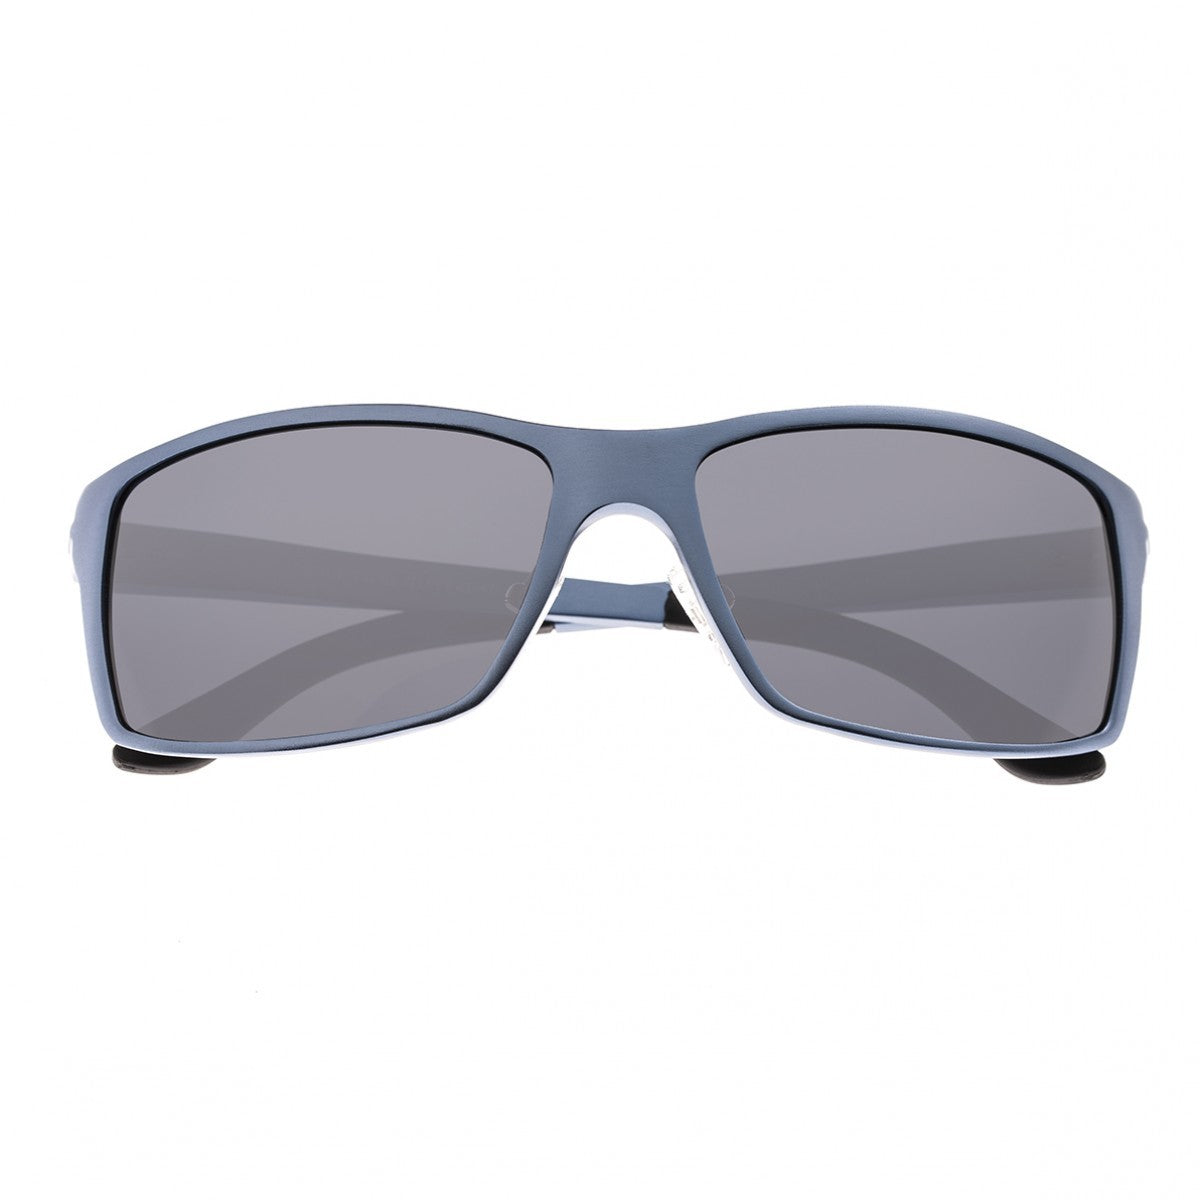 Breed Kaskade Aluminium Polarized Sunglasses - Blue/Black - BSG016BL